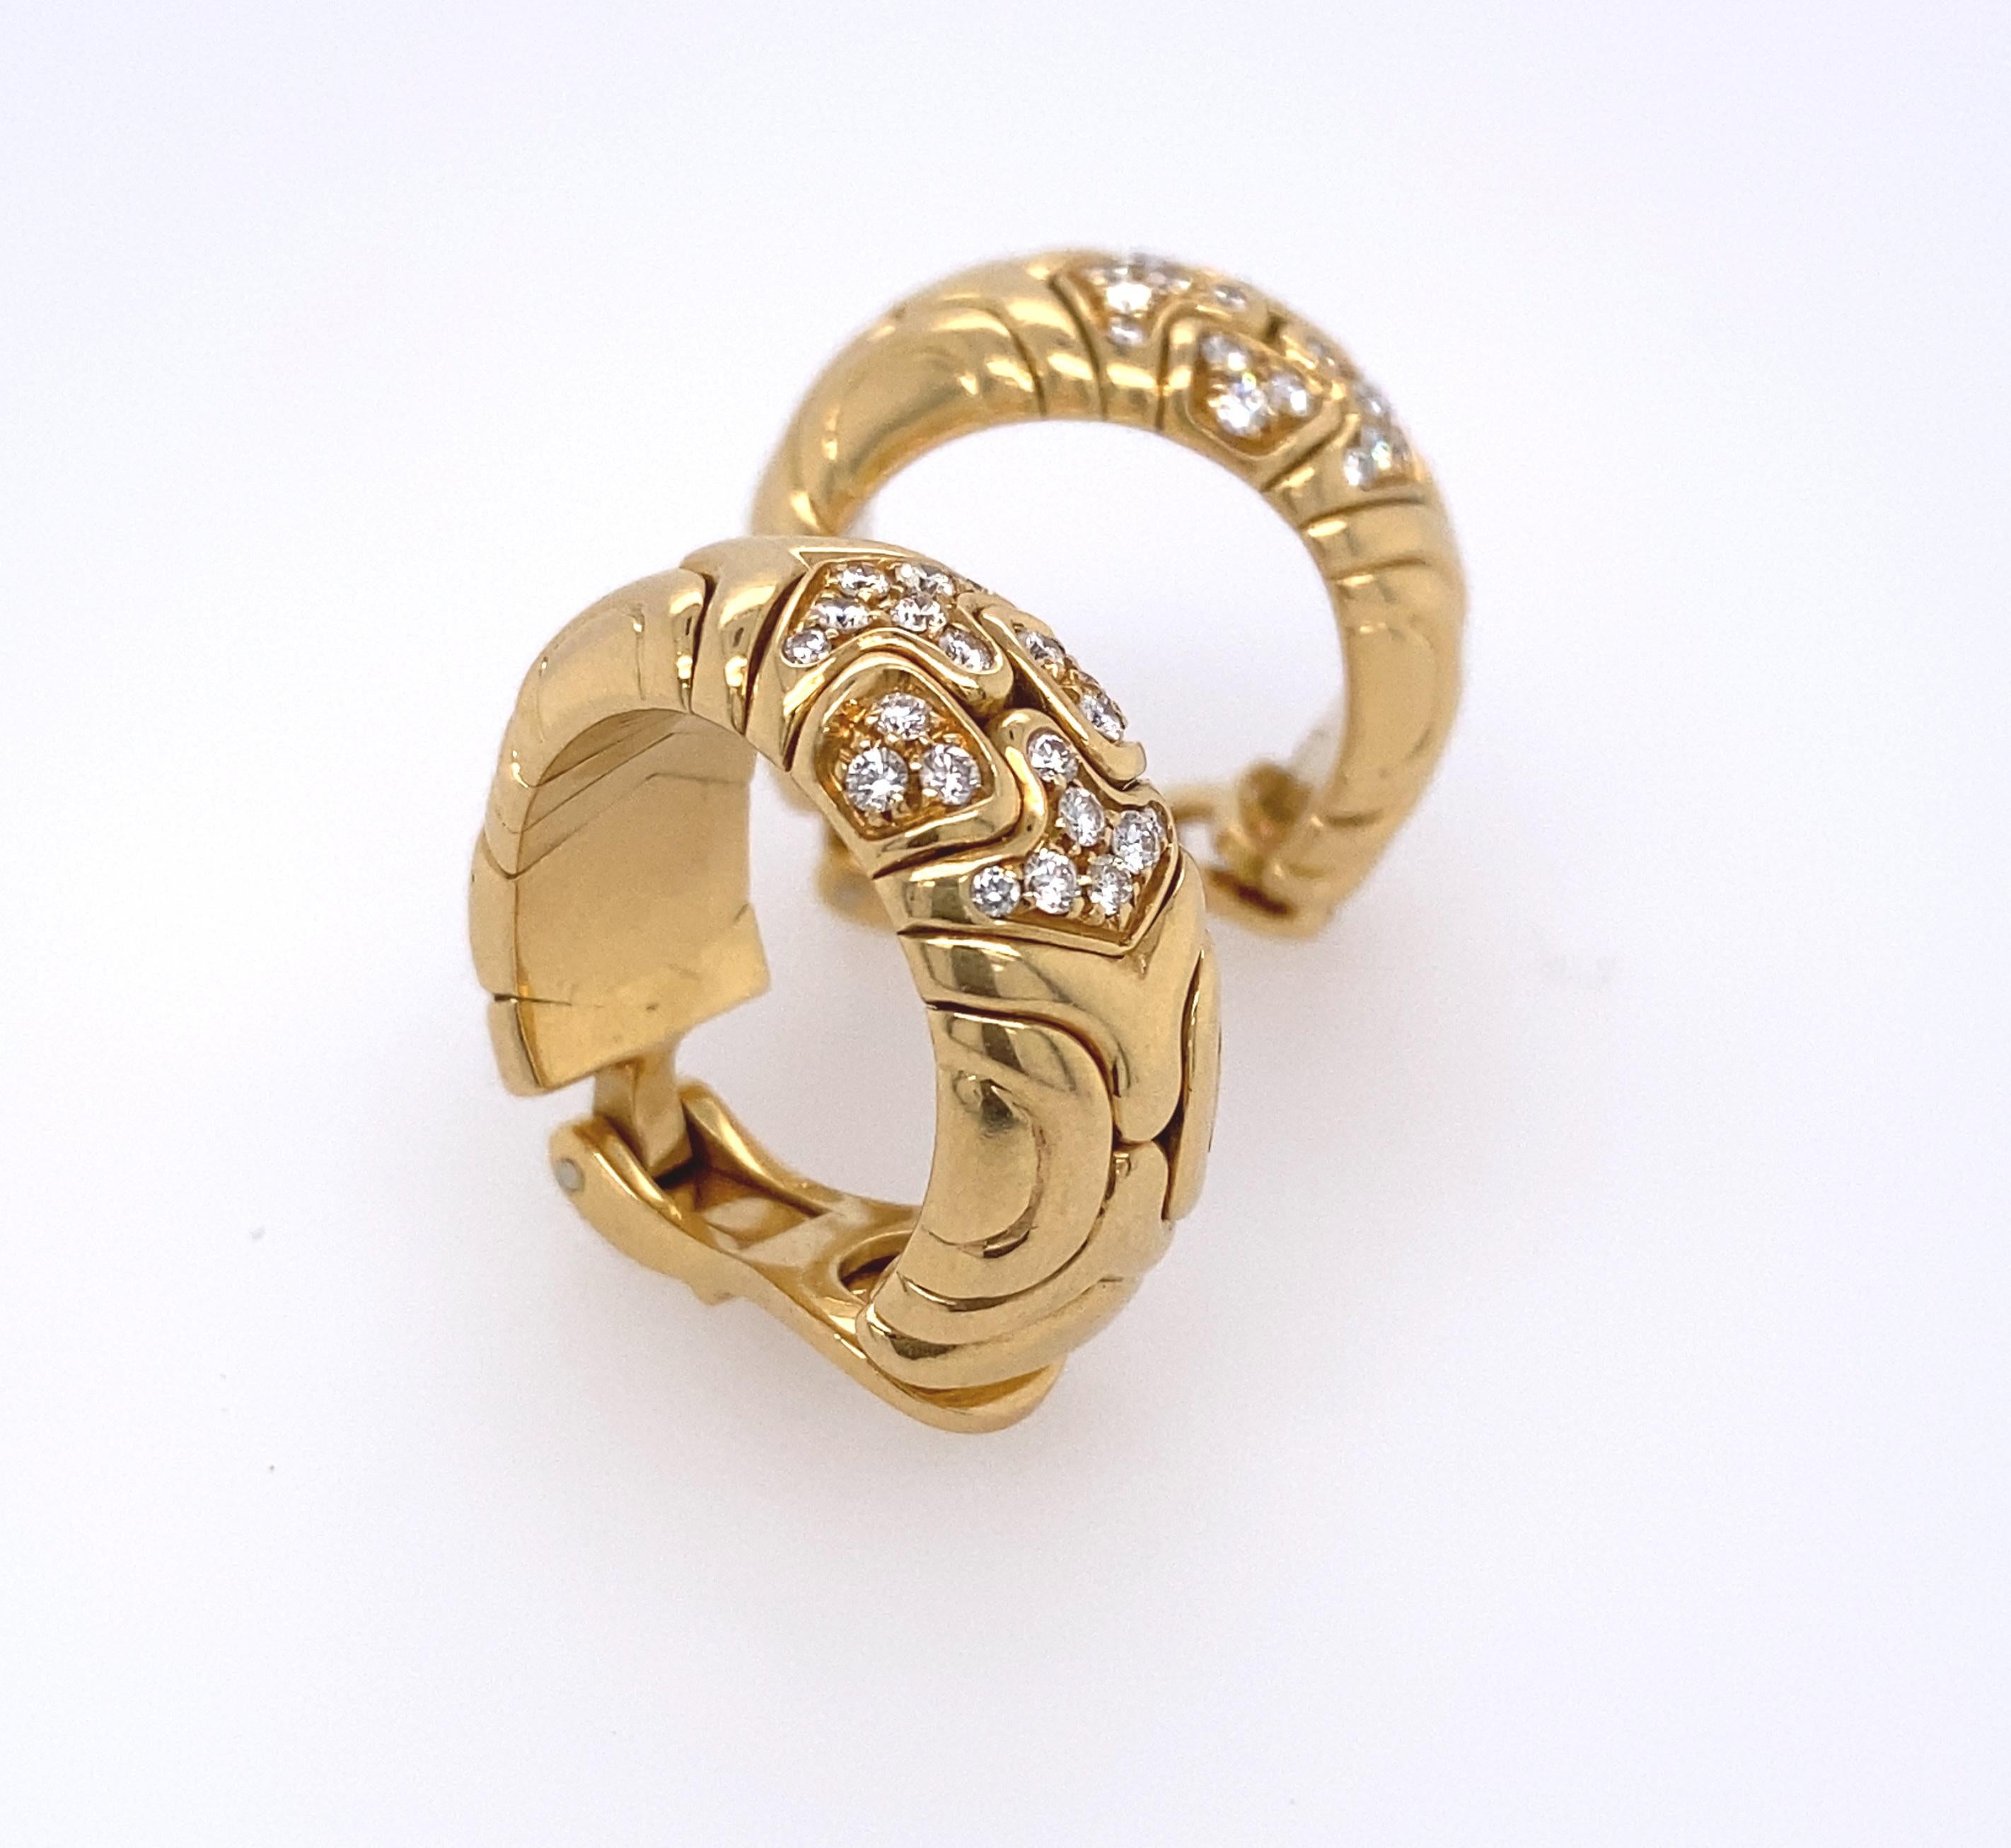 Bvlgari 18k Gold Diamond earrings 
Total weight 19.8 dwt Measurements 9.72 mm x 23.20 mm 